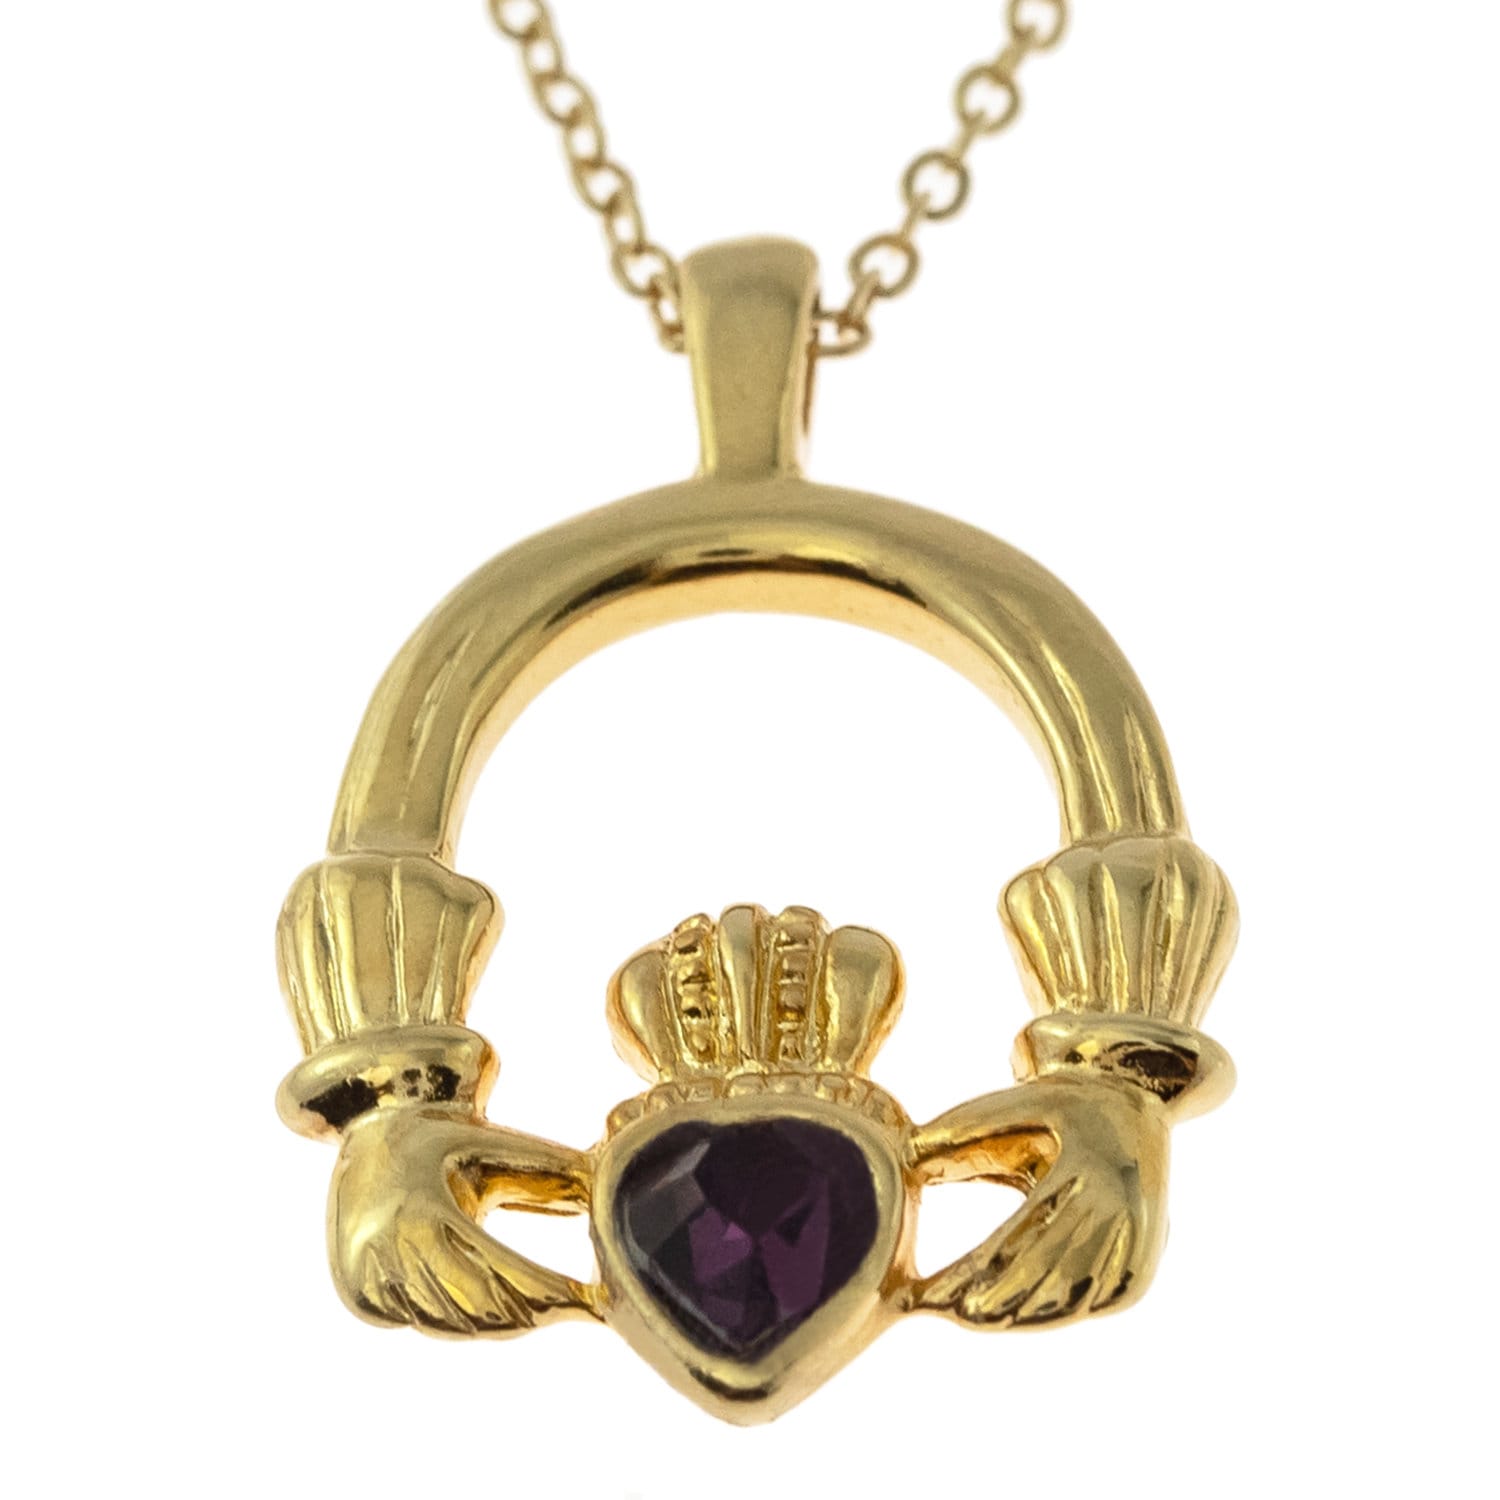 Vintage Claddagh Necklace Amethyst Swarovski Heart Crystal 18k Gold Antique Jewlery for Women N3099 - Limited Stock - Never Worn